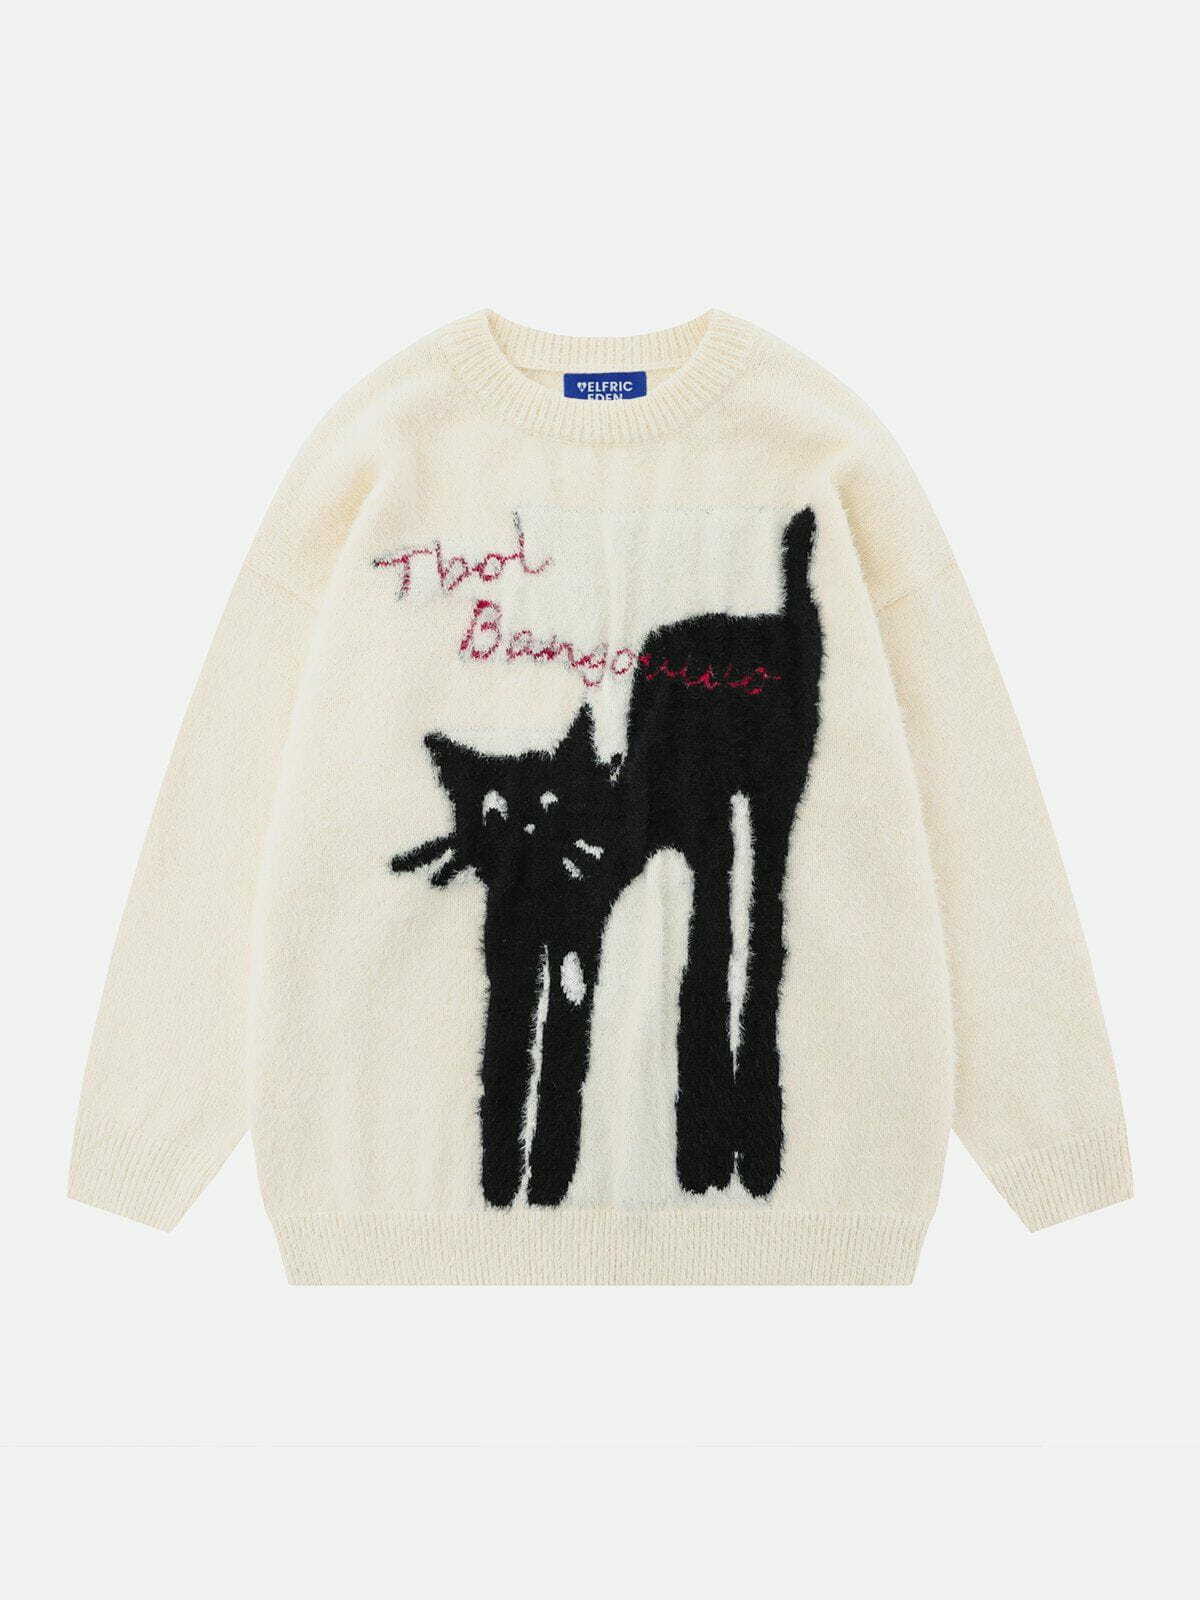 cute cat jacquard sweater   chic & youthful urban style 6211